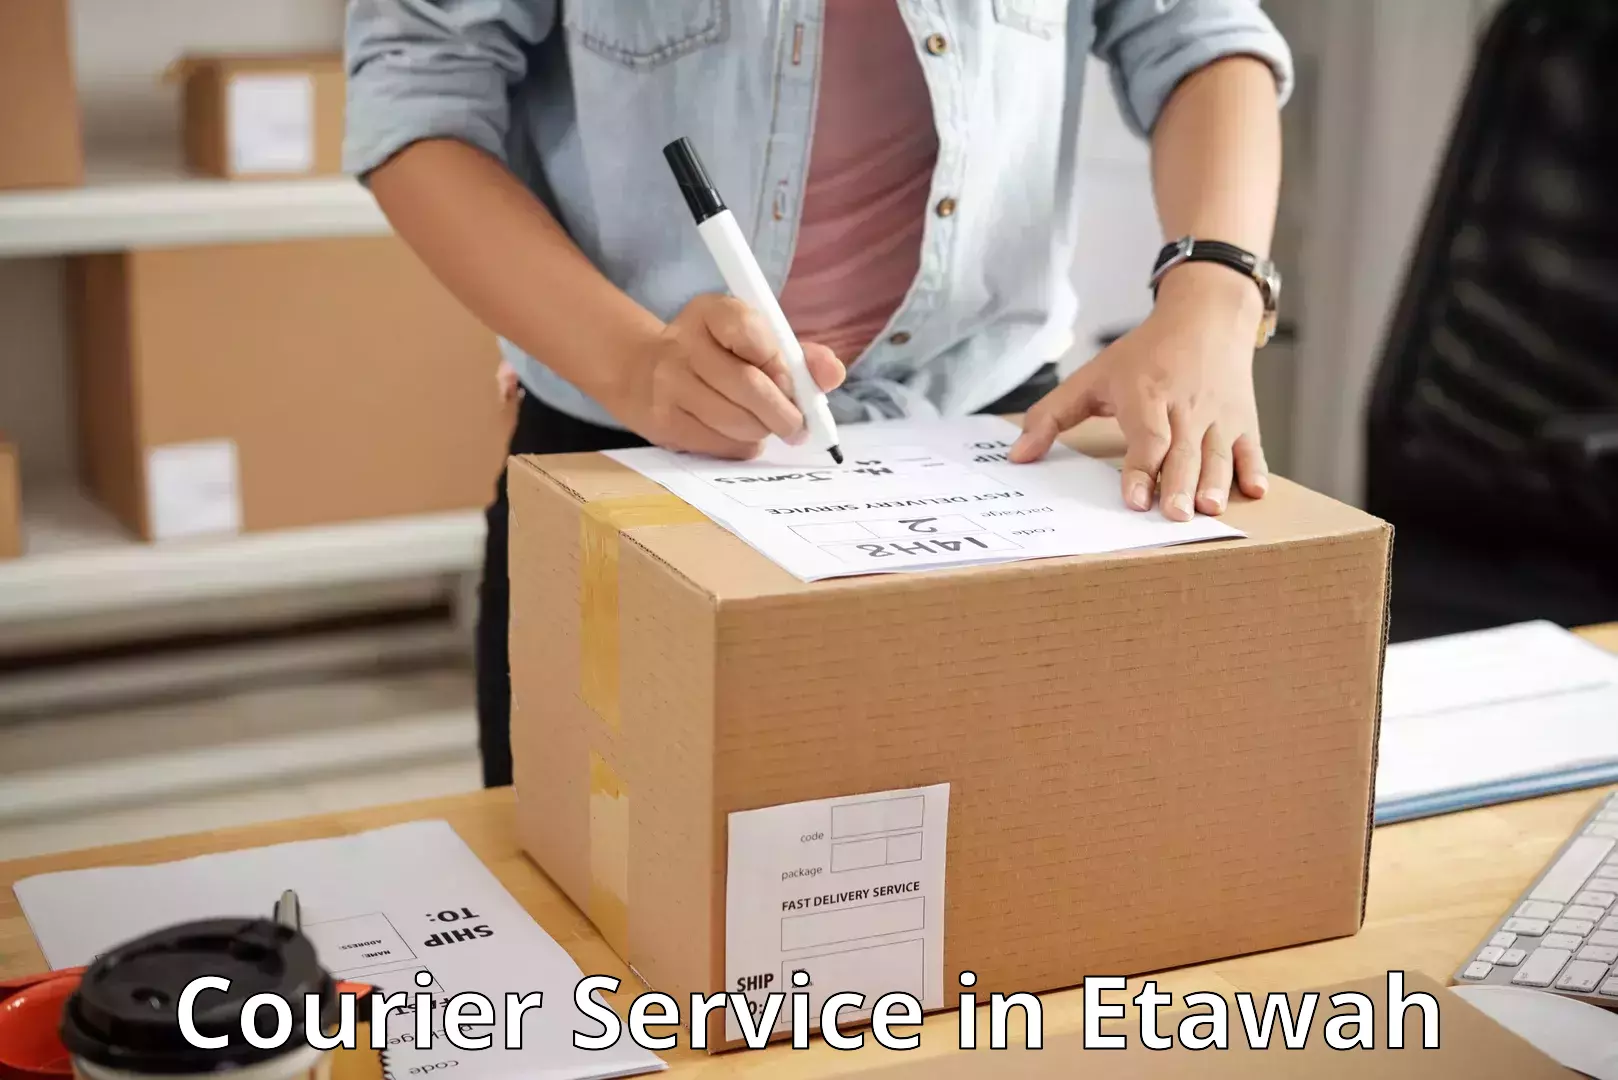 High-capacity shipping options in Etawah